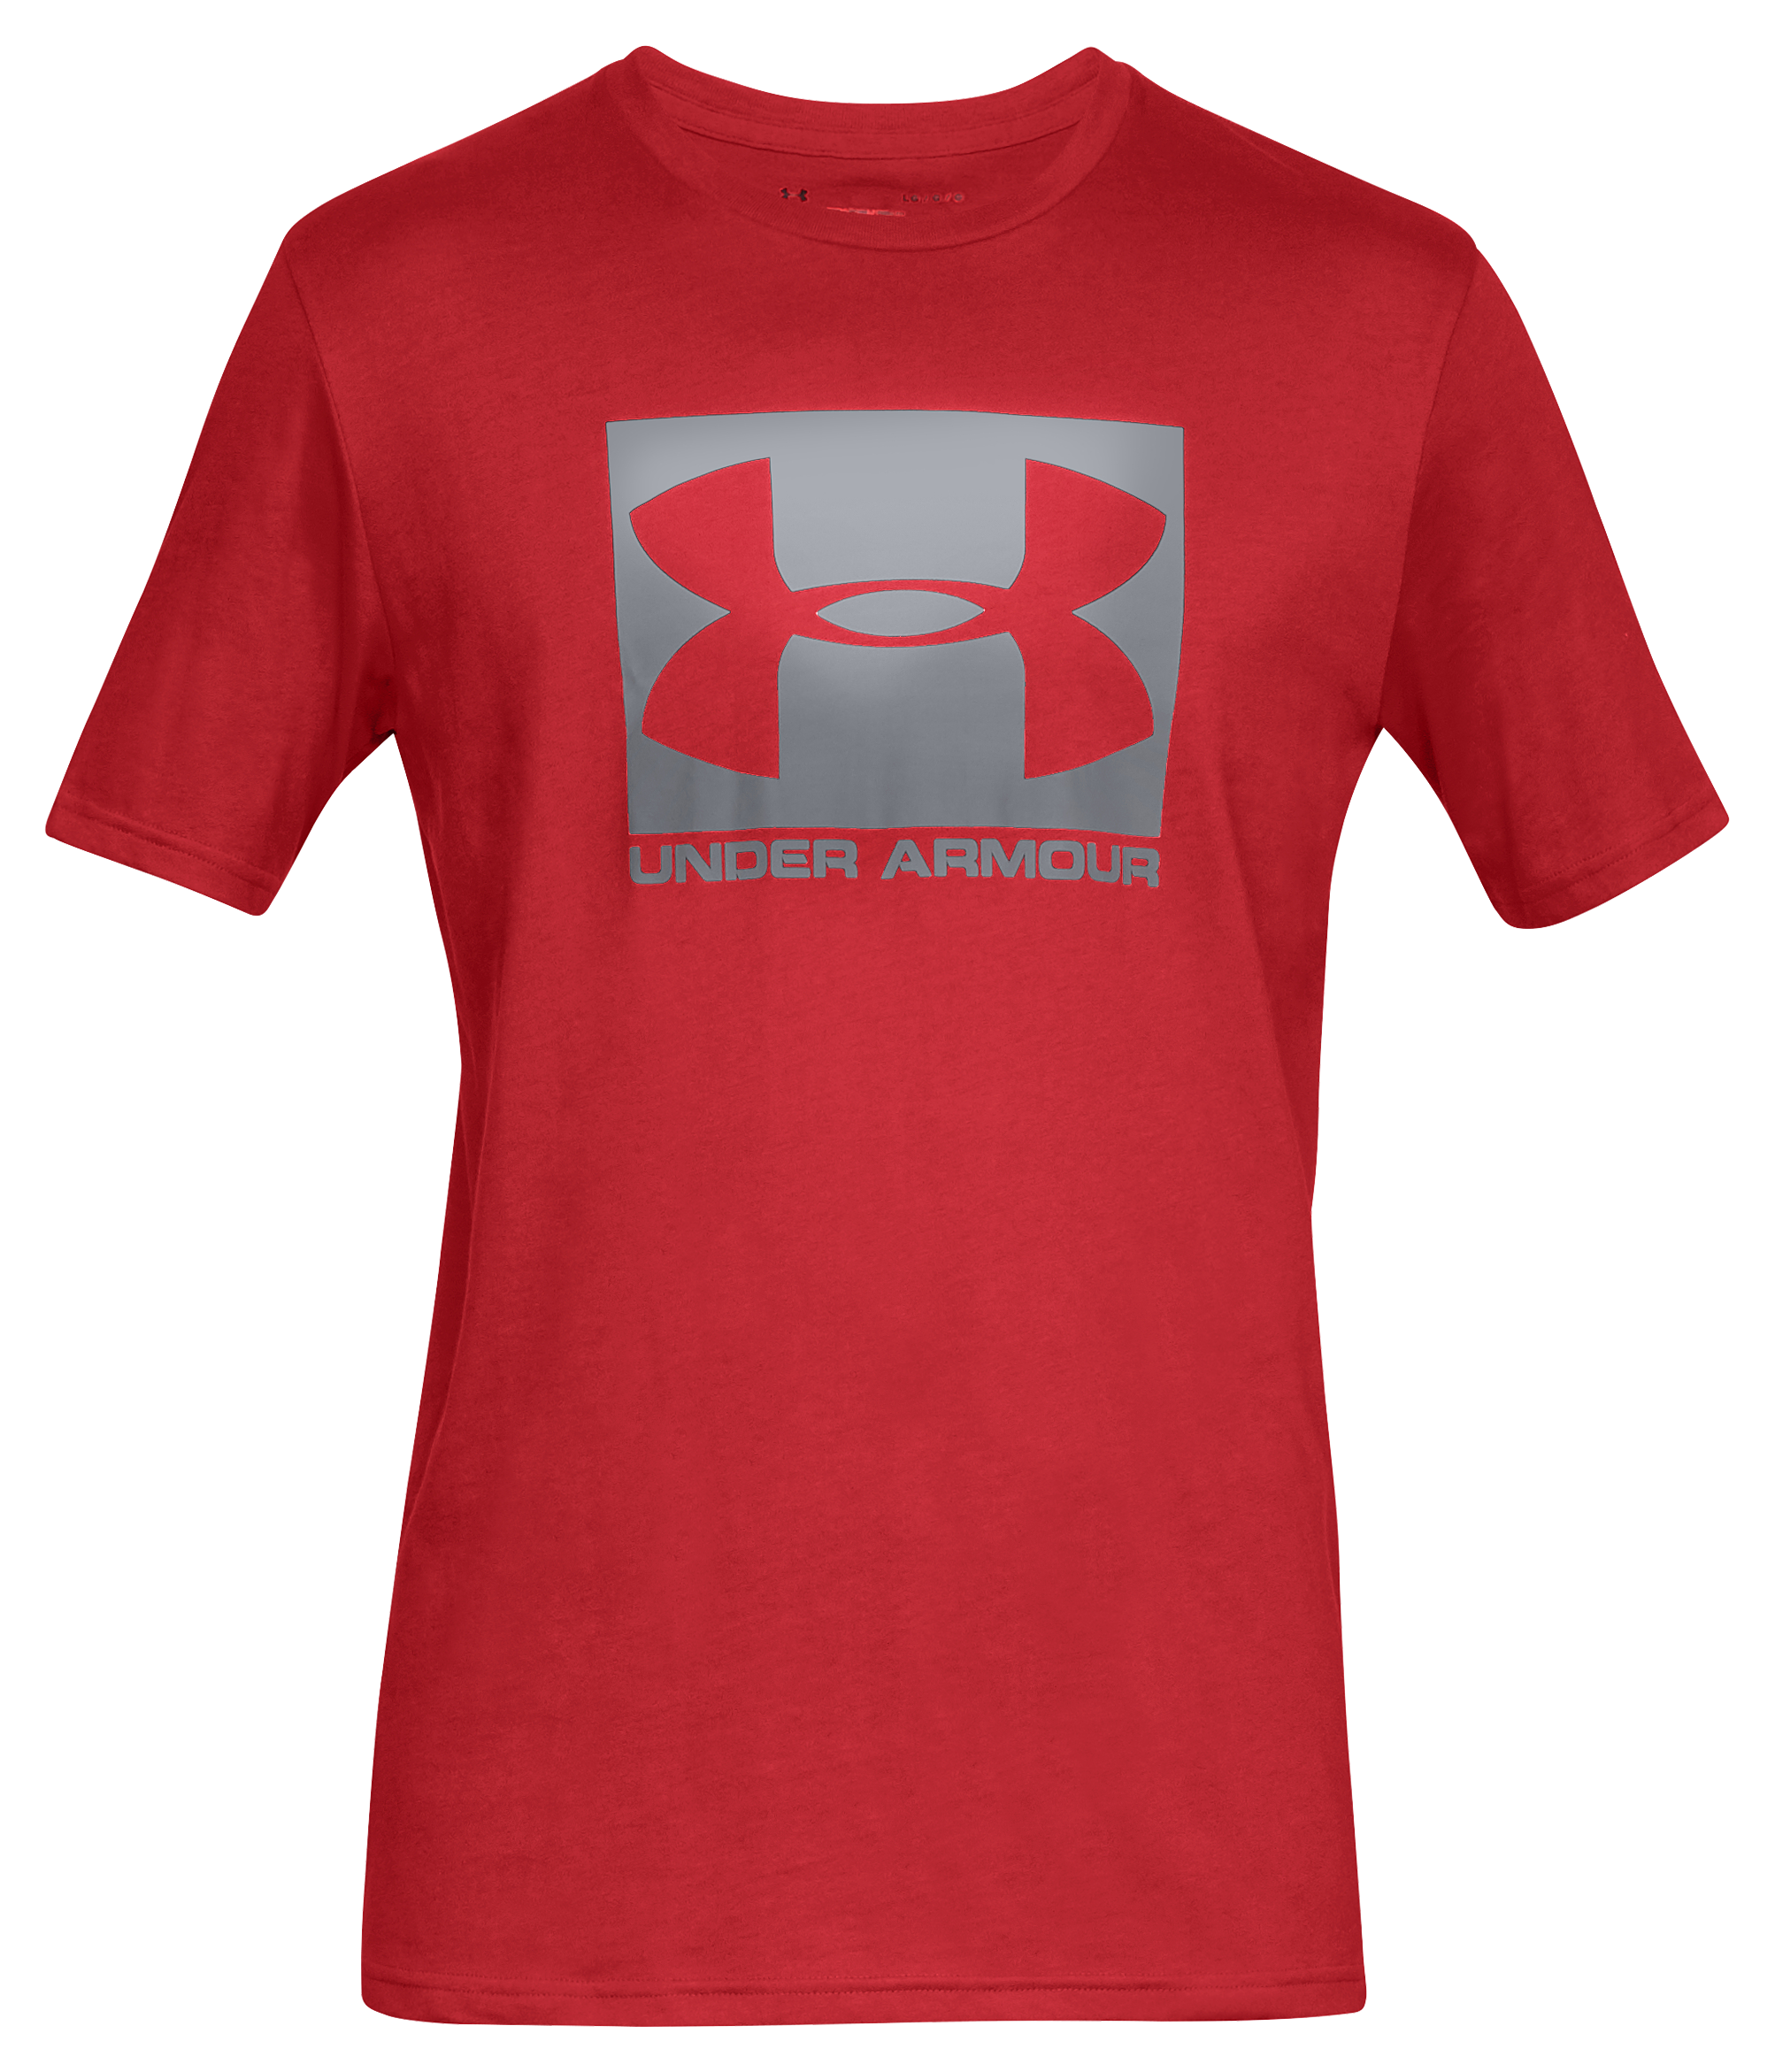 Bass Pro Shops Johnny Morris Logo Short Sleeve T-Shirt Size 3XL